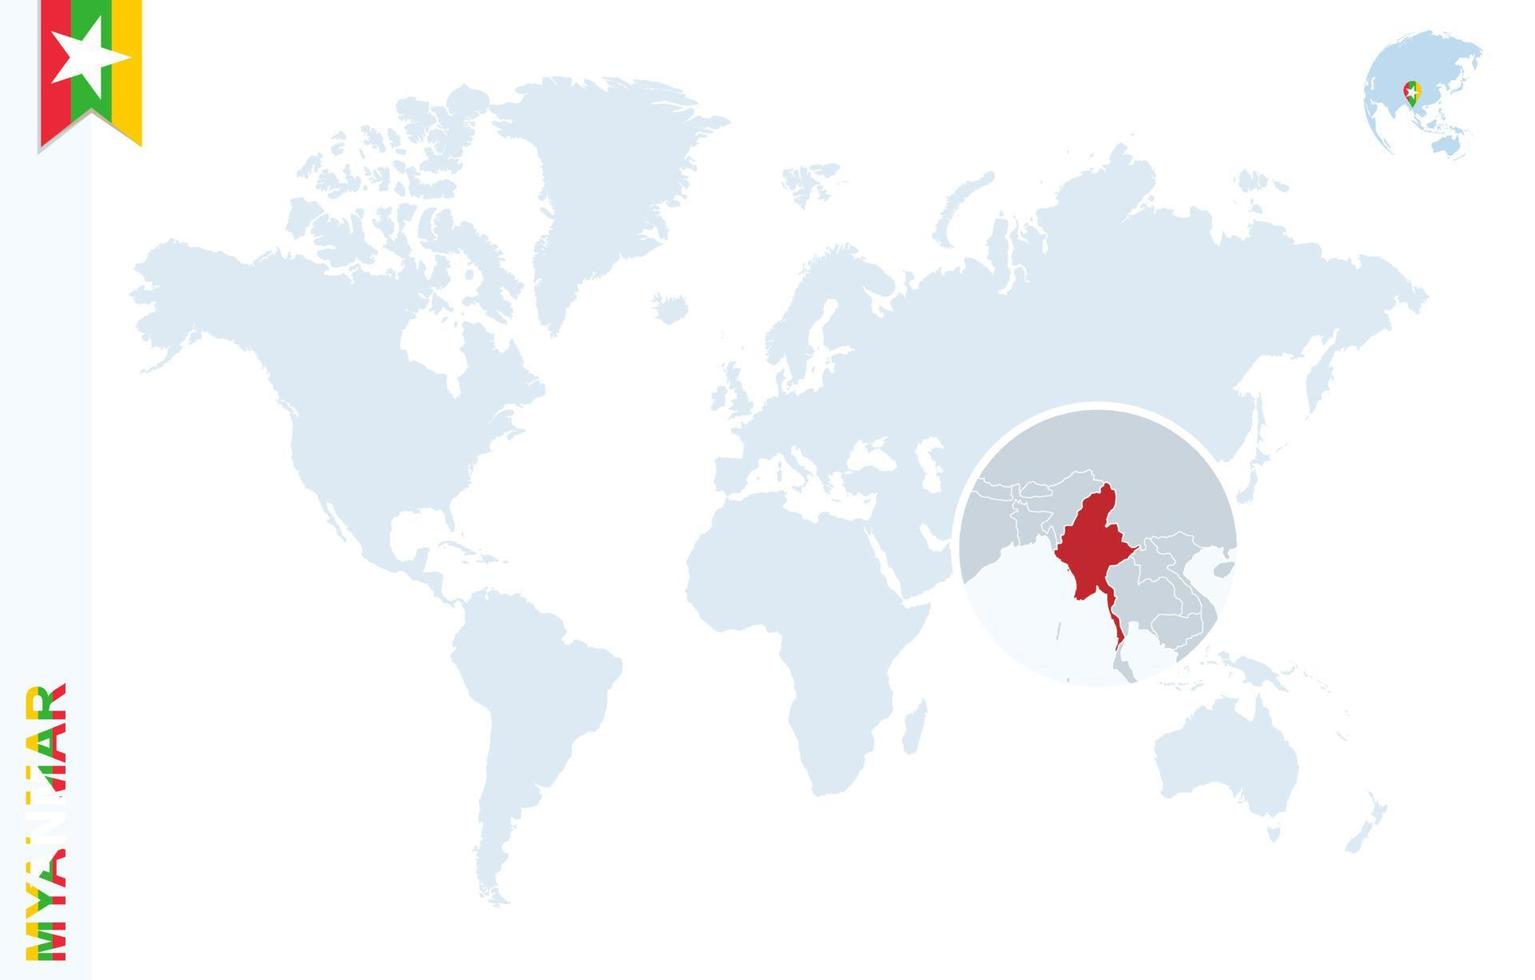 blu mondo carta geografica con ingrandimento su Myanmar. vettore